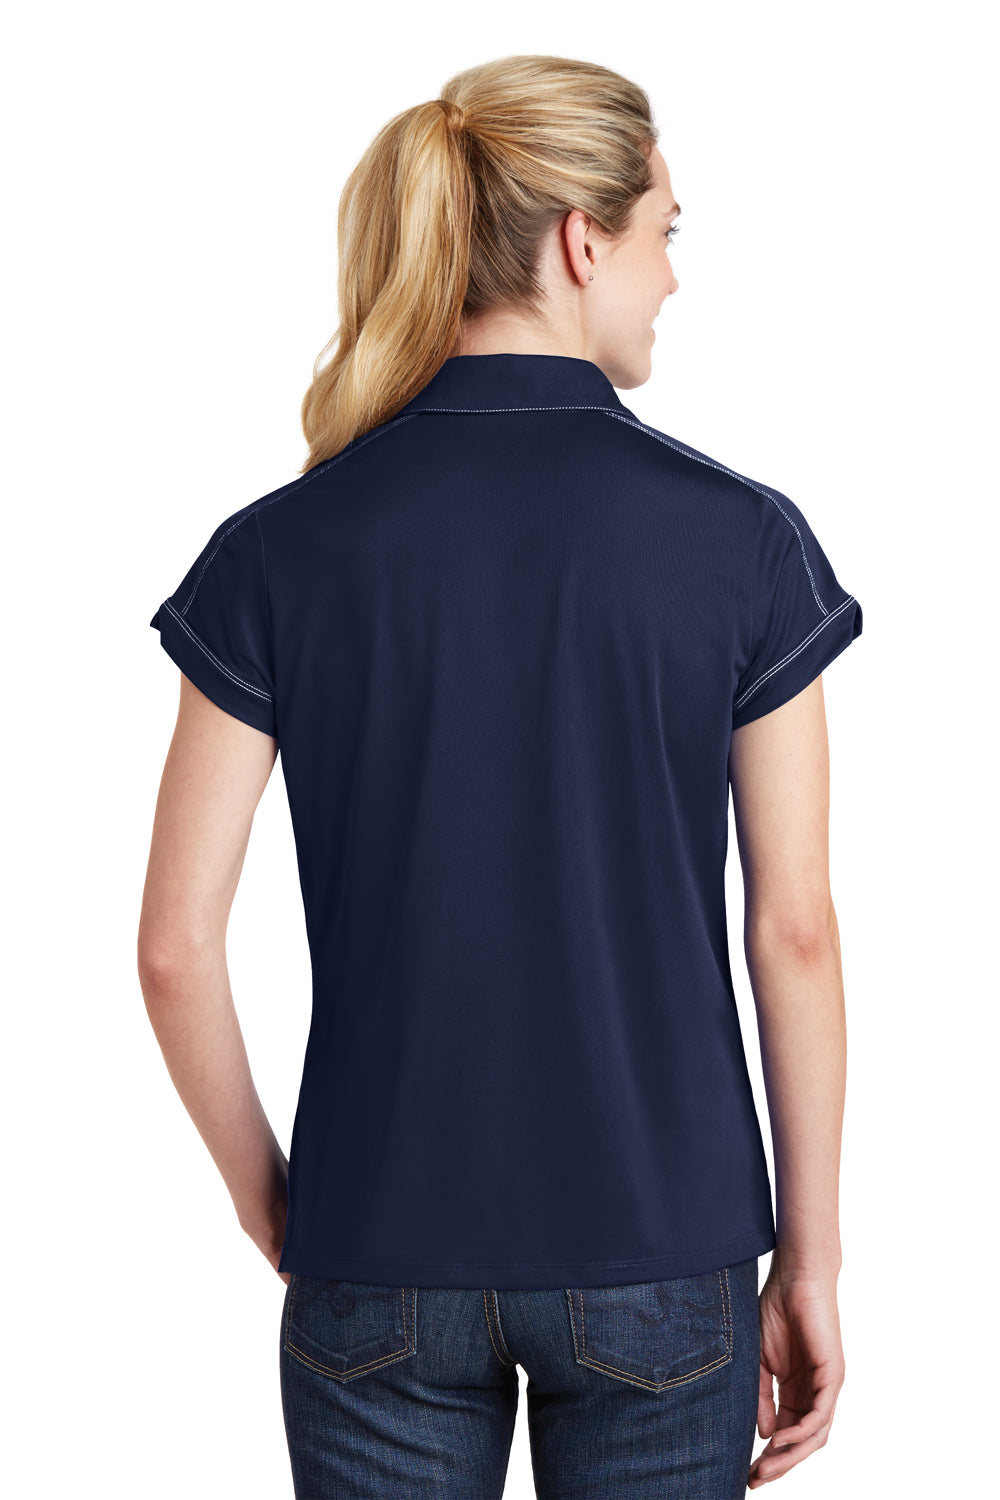 Sport-Tek LST659 Womens Sport-Wick Moisture Wicking Short Sleeve Polo Shirt Navy Blue Back